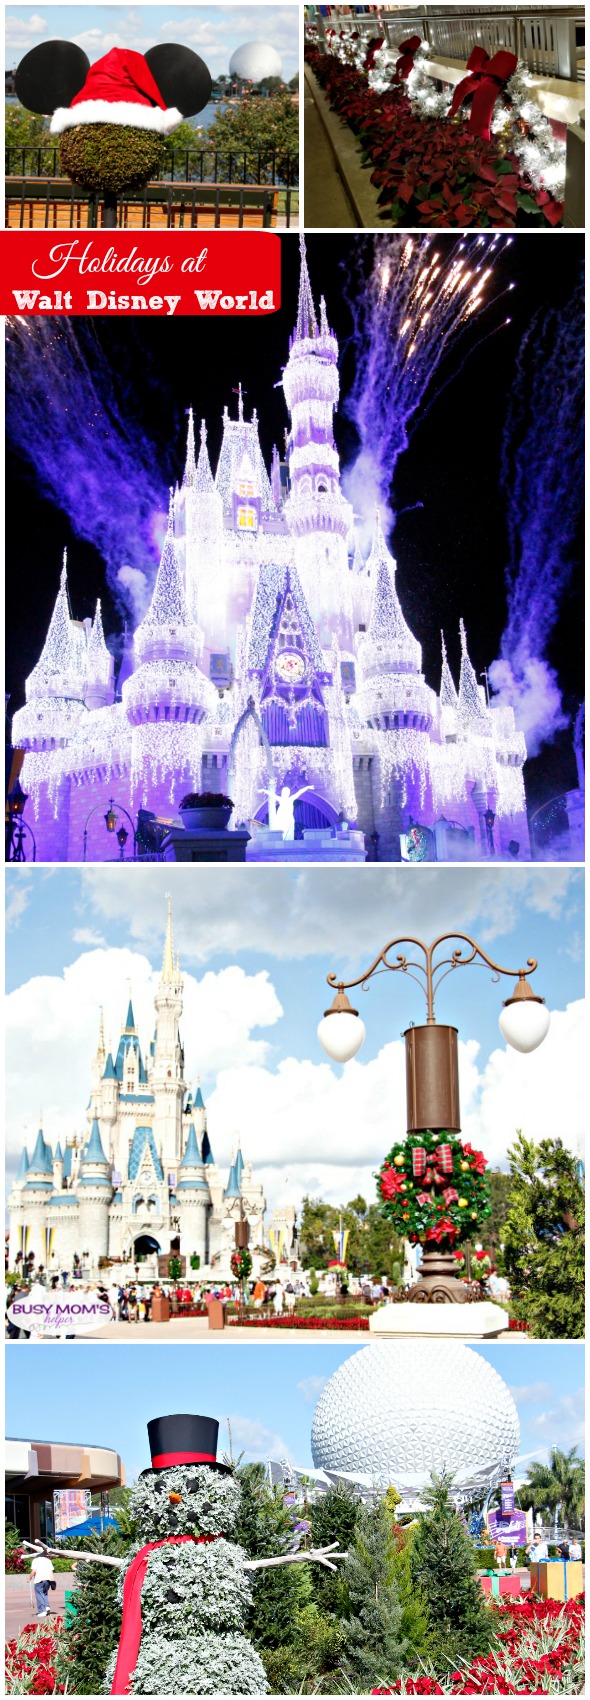 Holidays at Walt Disney World #disney #christmas #waltdisneyworld #holidays #travel #bmhtravel #orlando